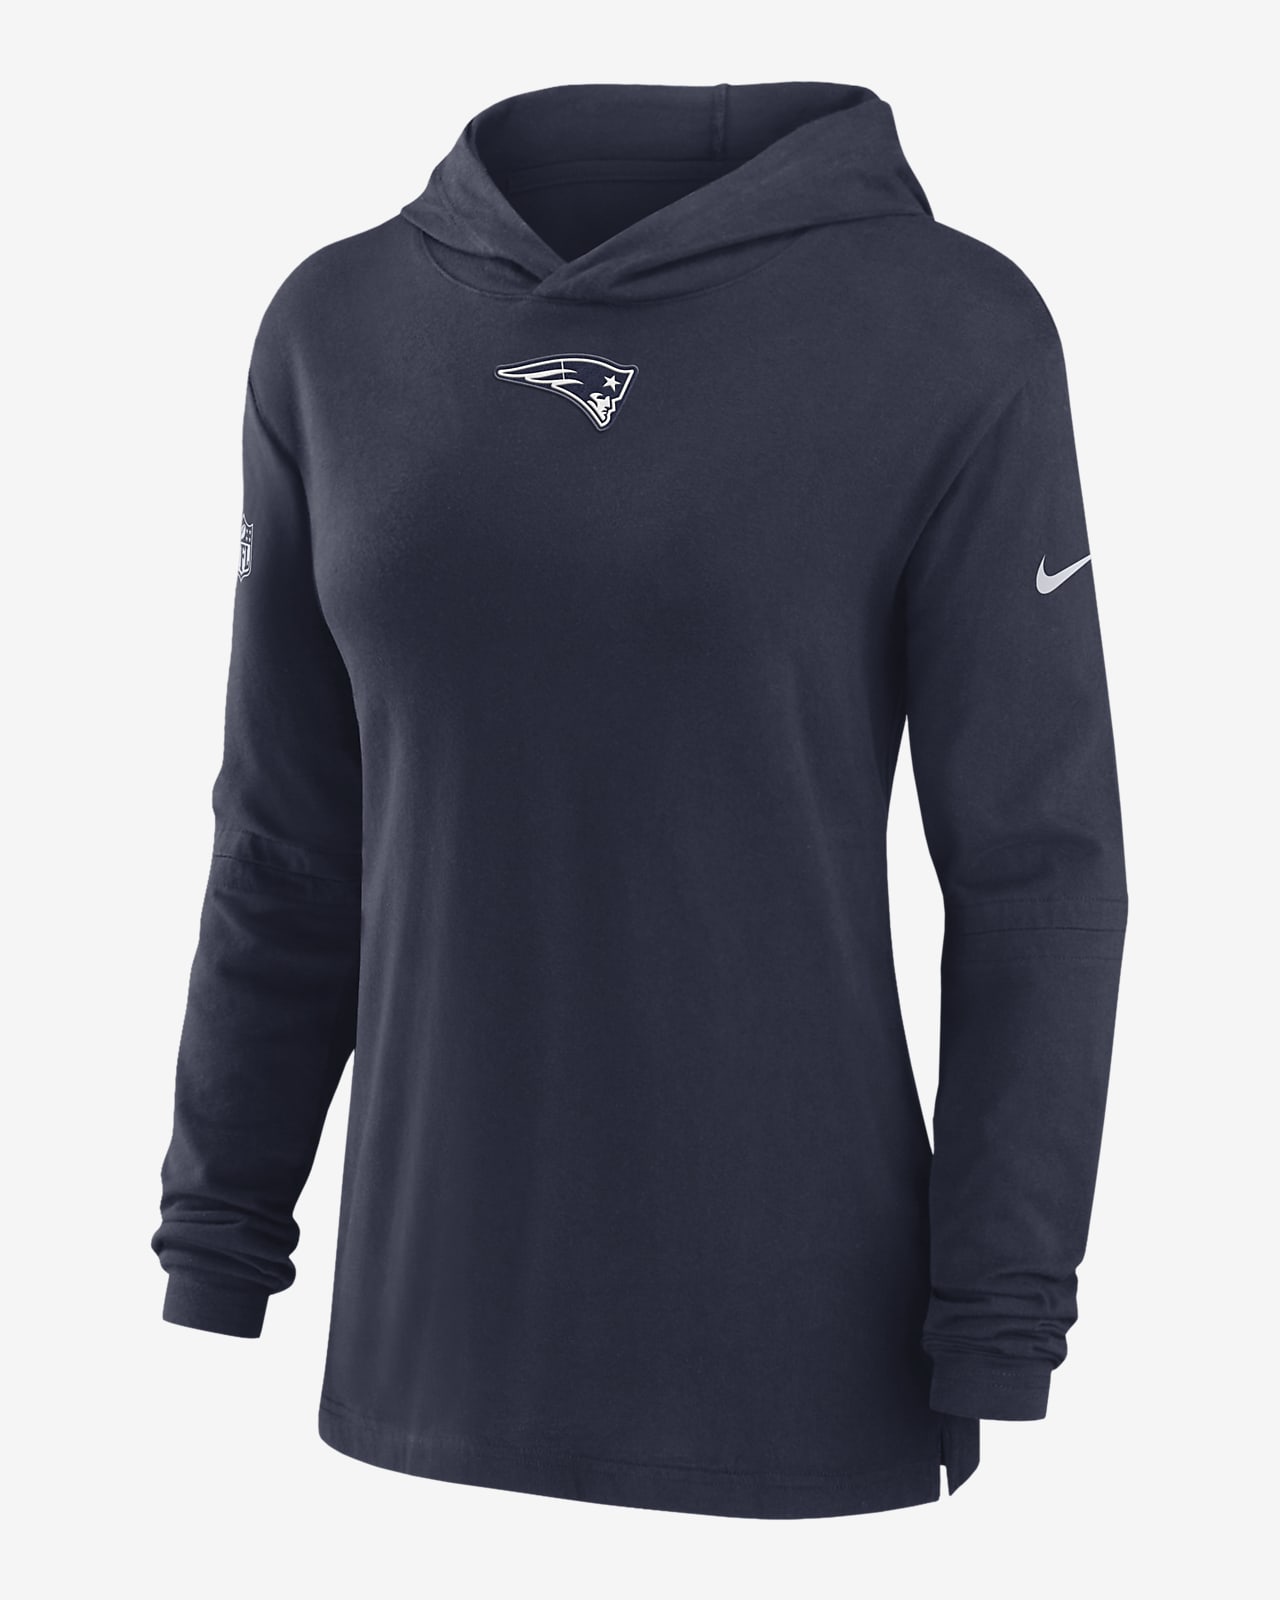 Nike Dri-FIT Sideline (NFL New England Patriots) Women's Long-Sleeve Hooded Top